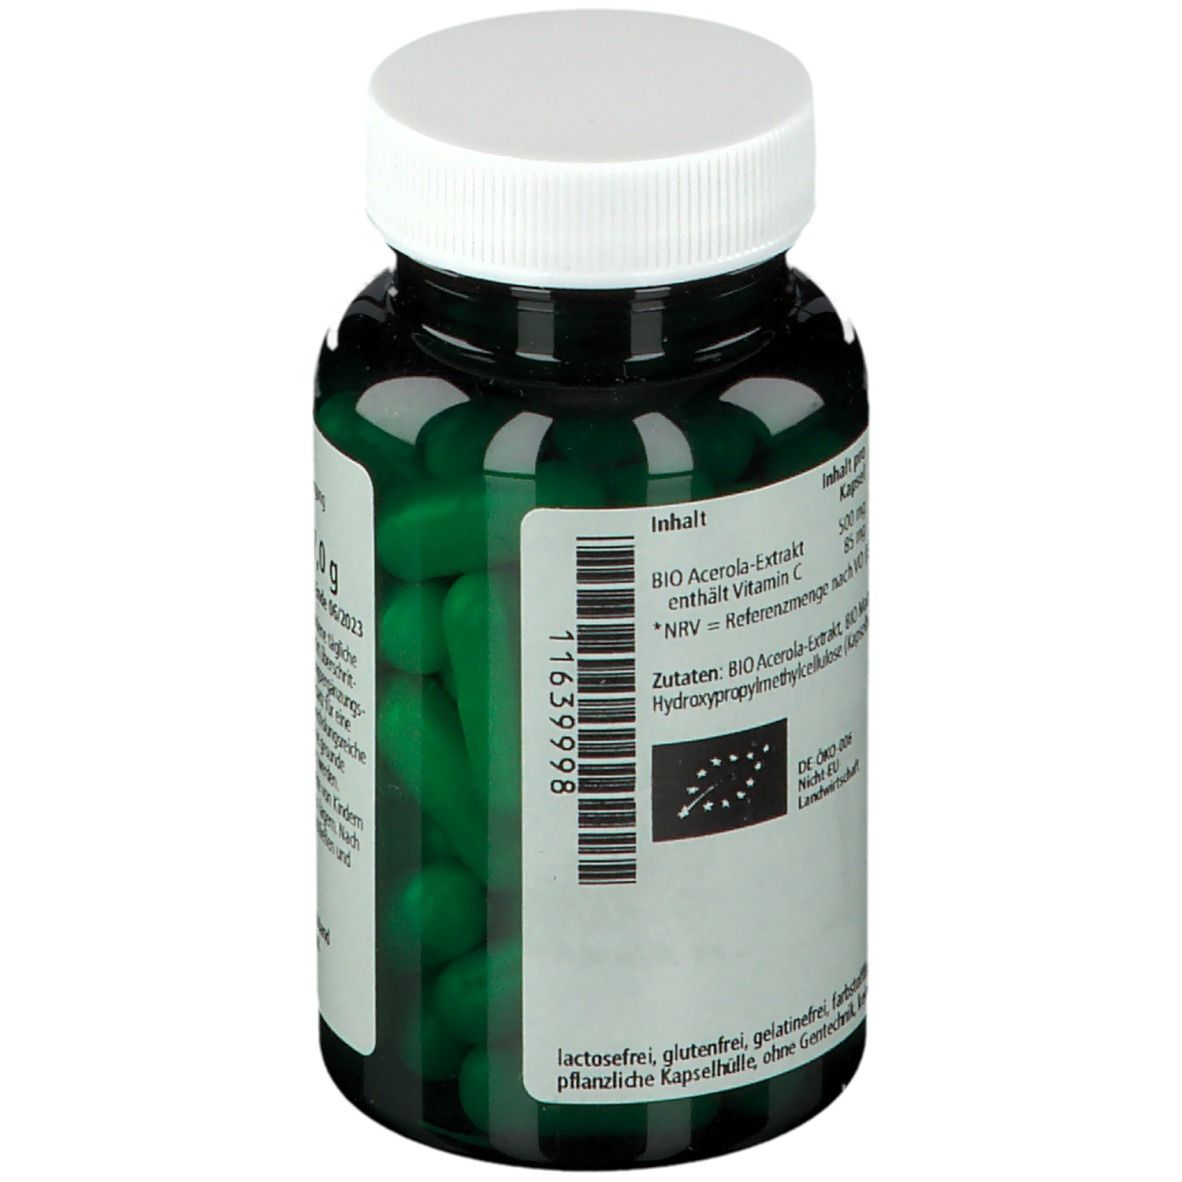 green line Acerola 500 mg Pur